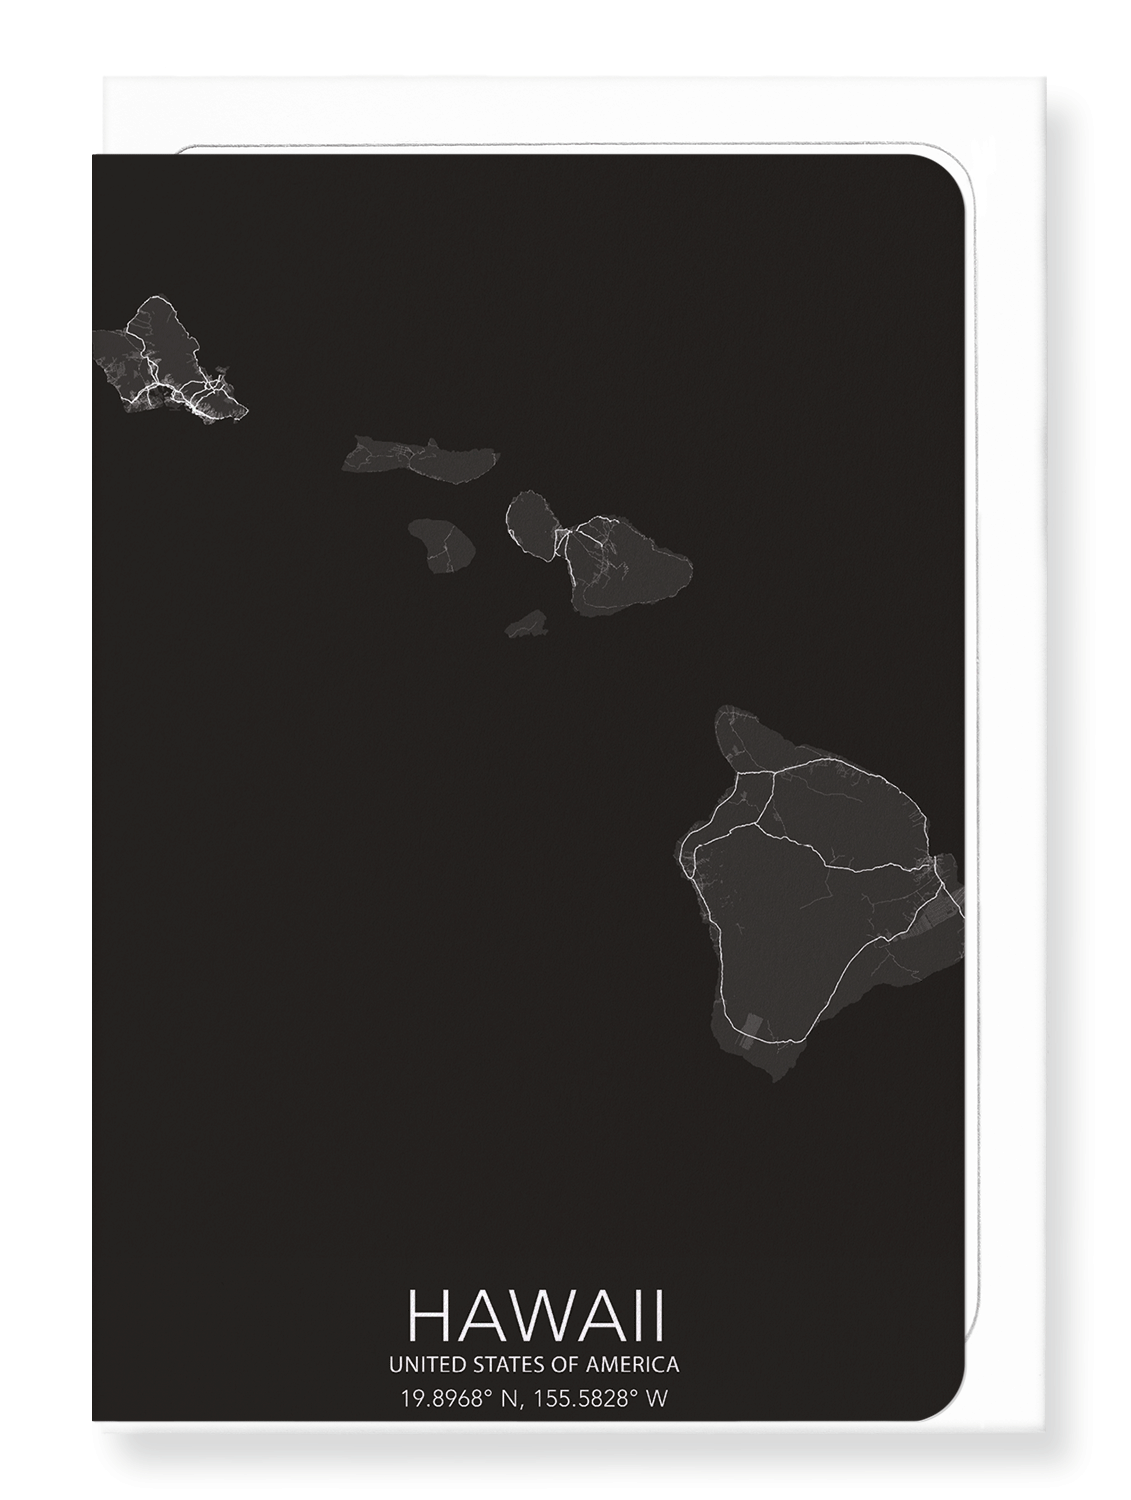 HAWAII FULL MAP: 8xCards